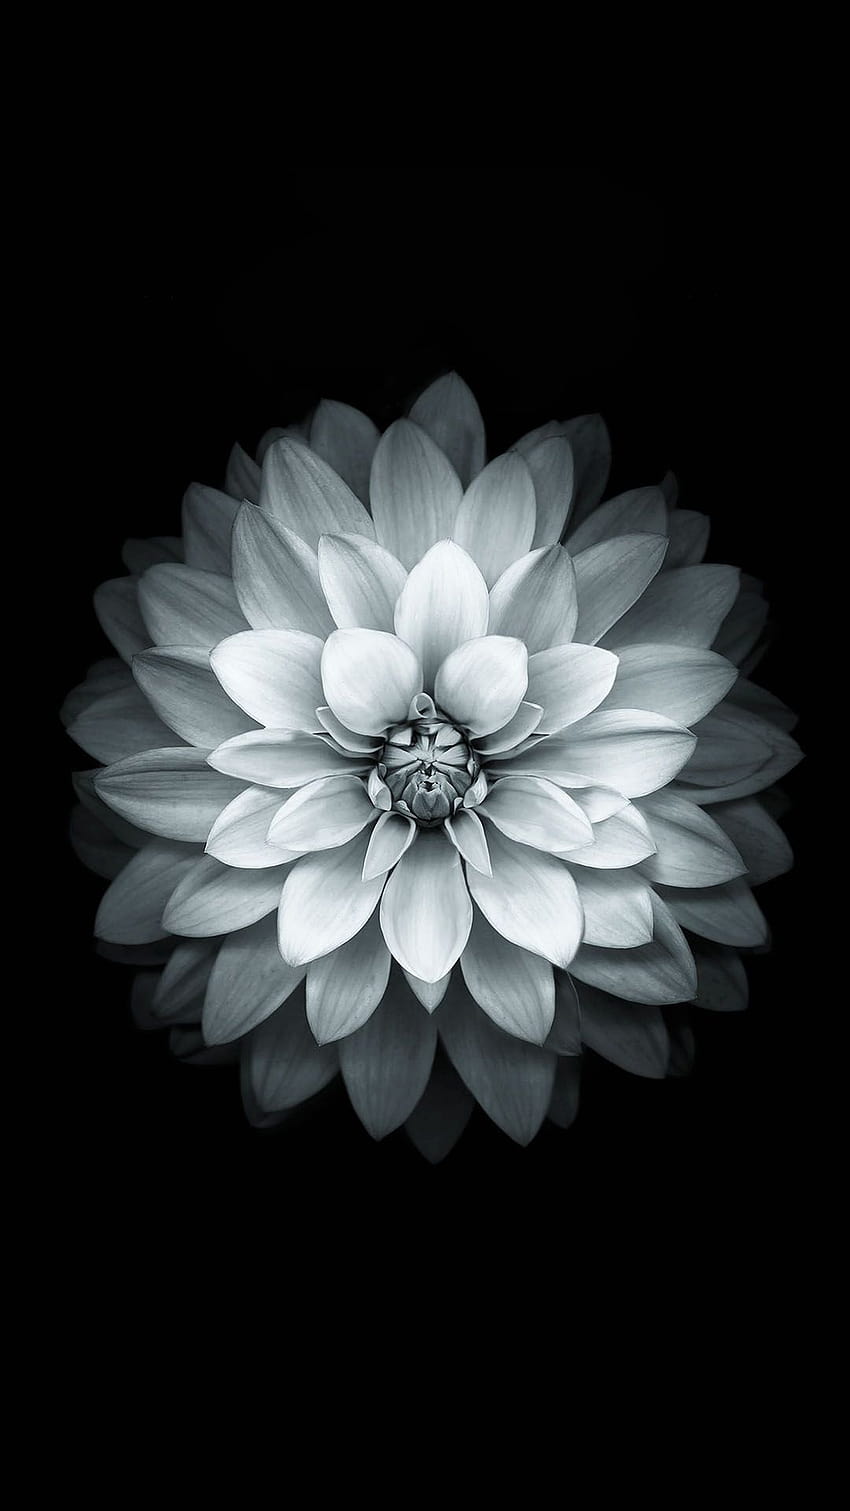 Black White Apple Lotus Flower Android, flor amoled de alta resolución fondo de pantalla del teléfono